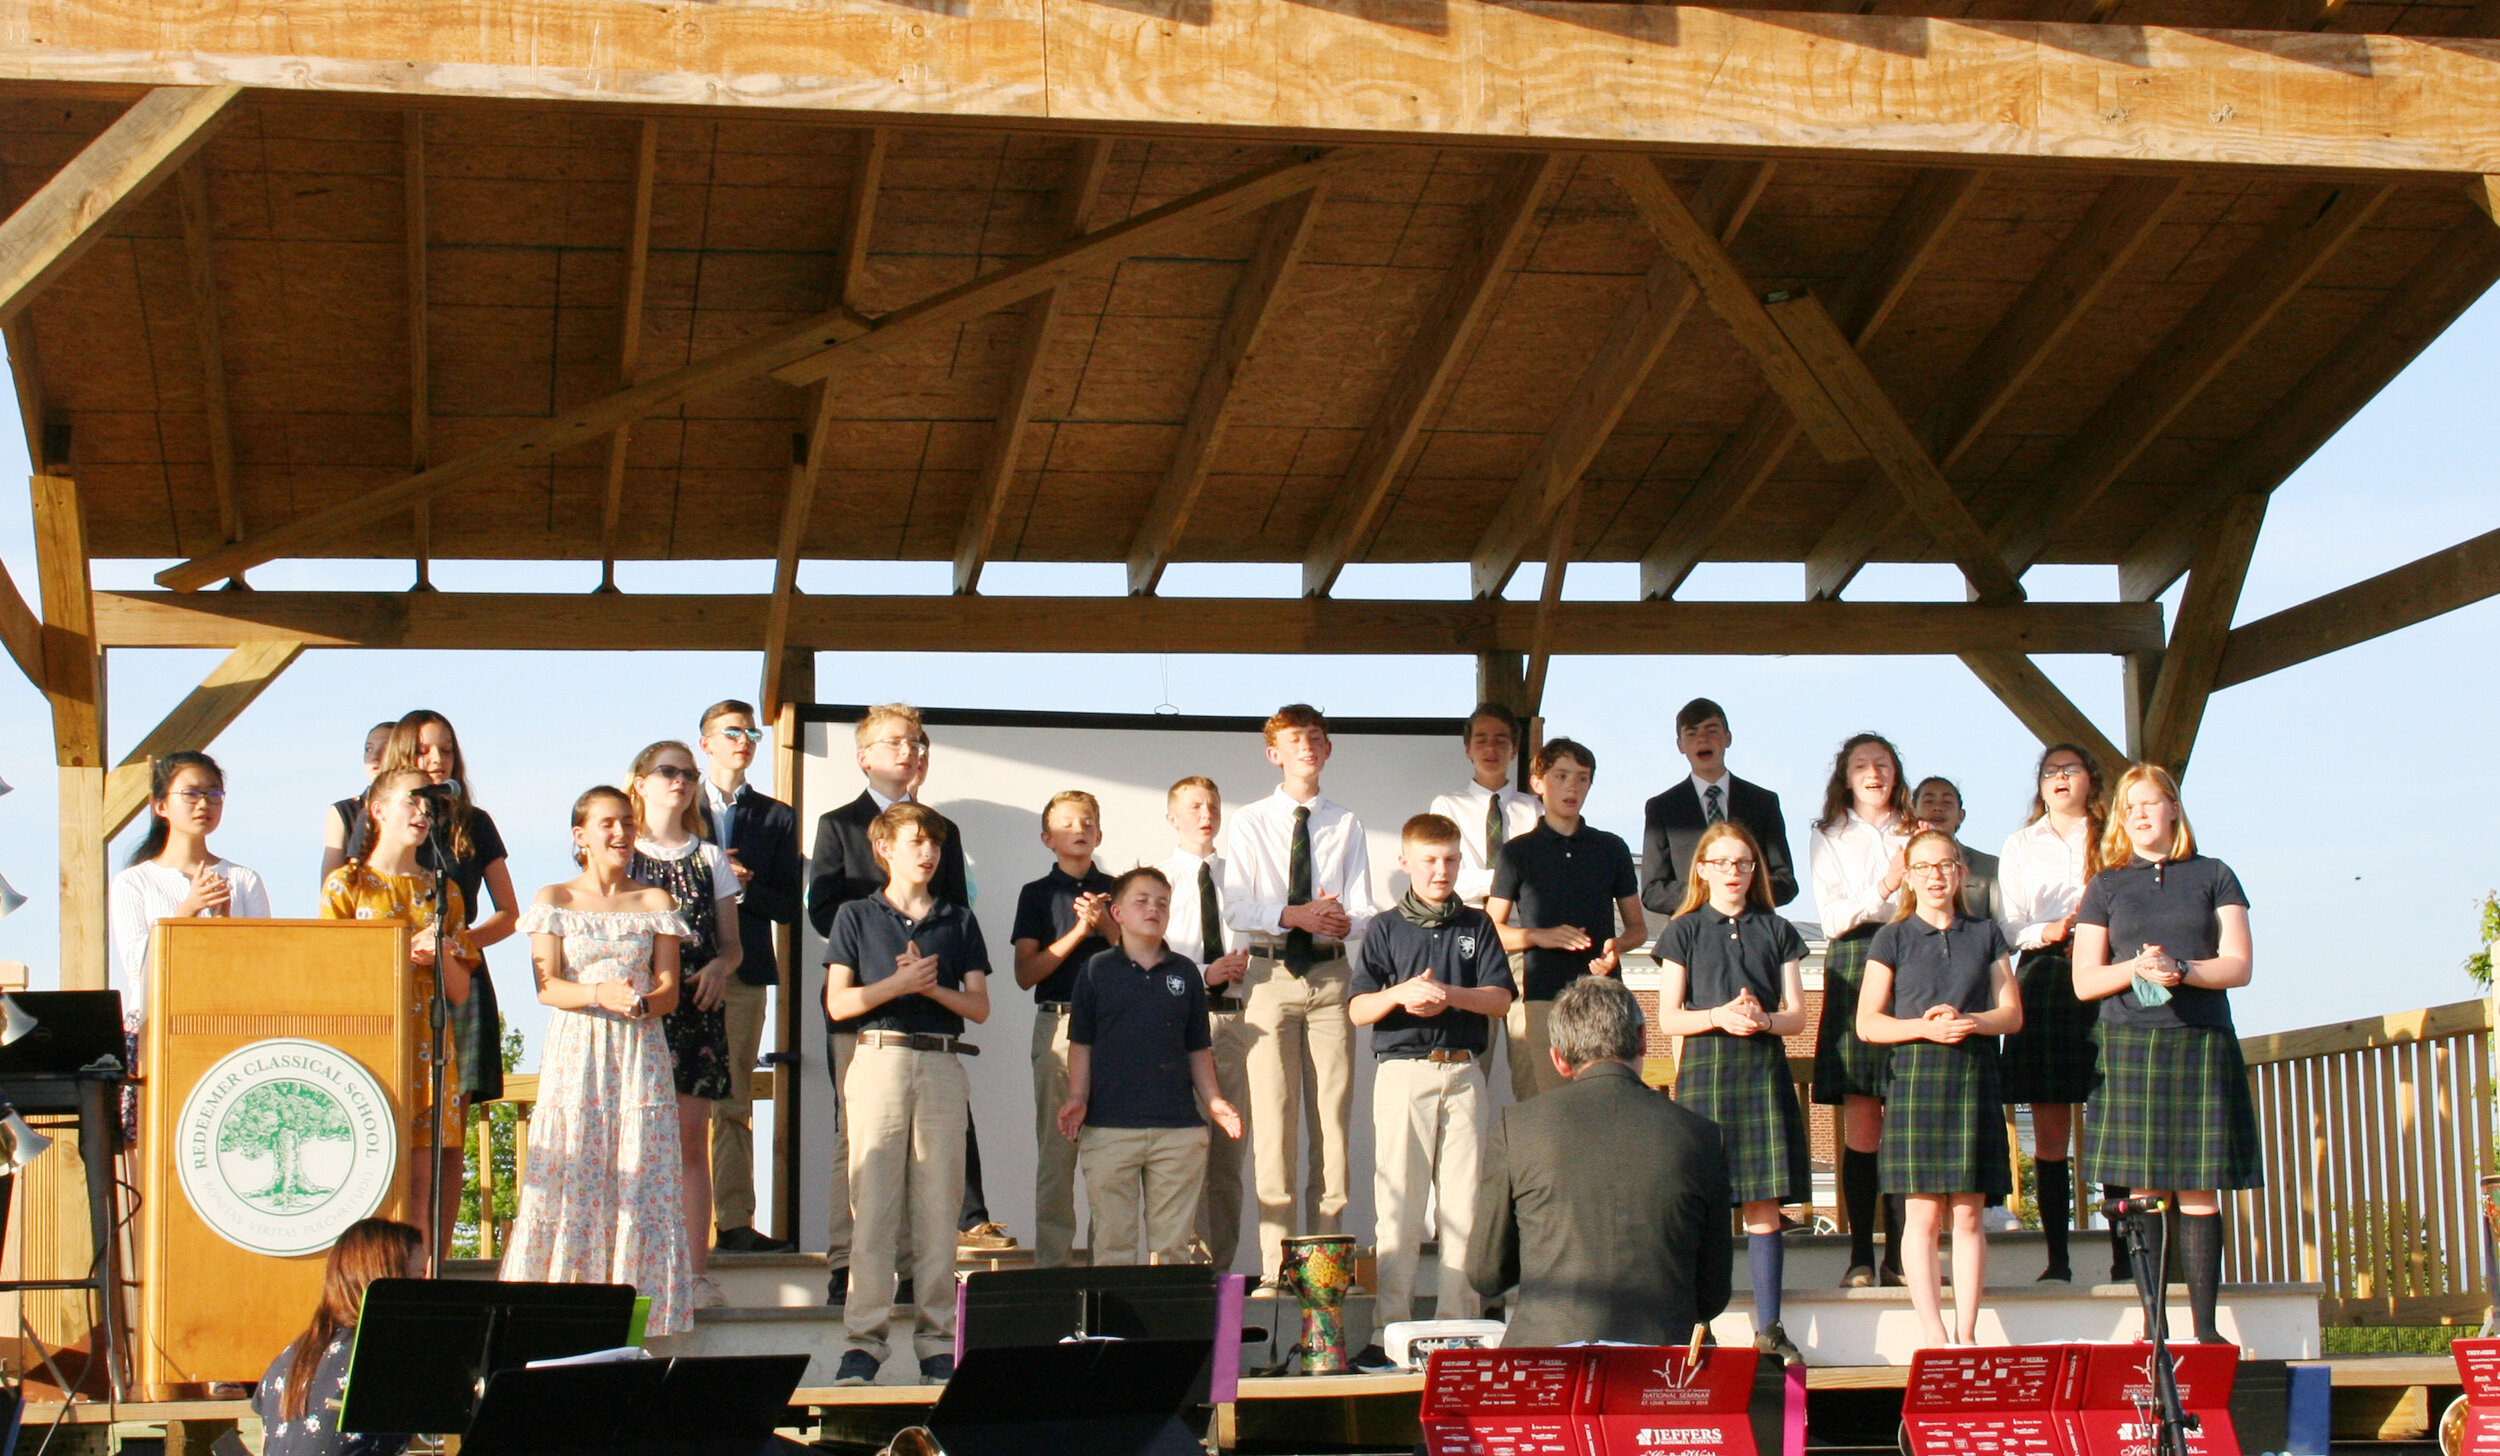 The Redeemer Choir